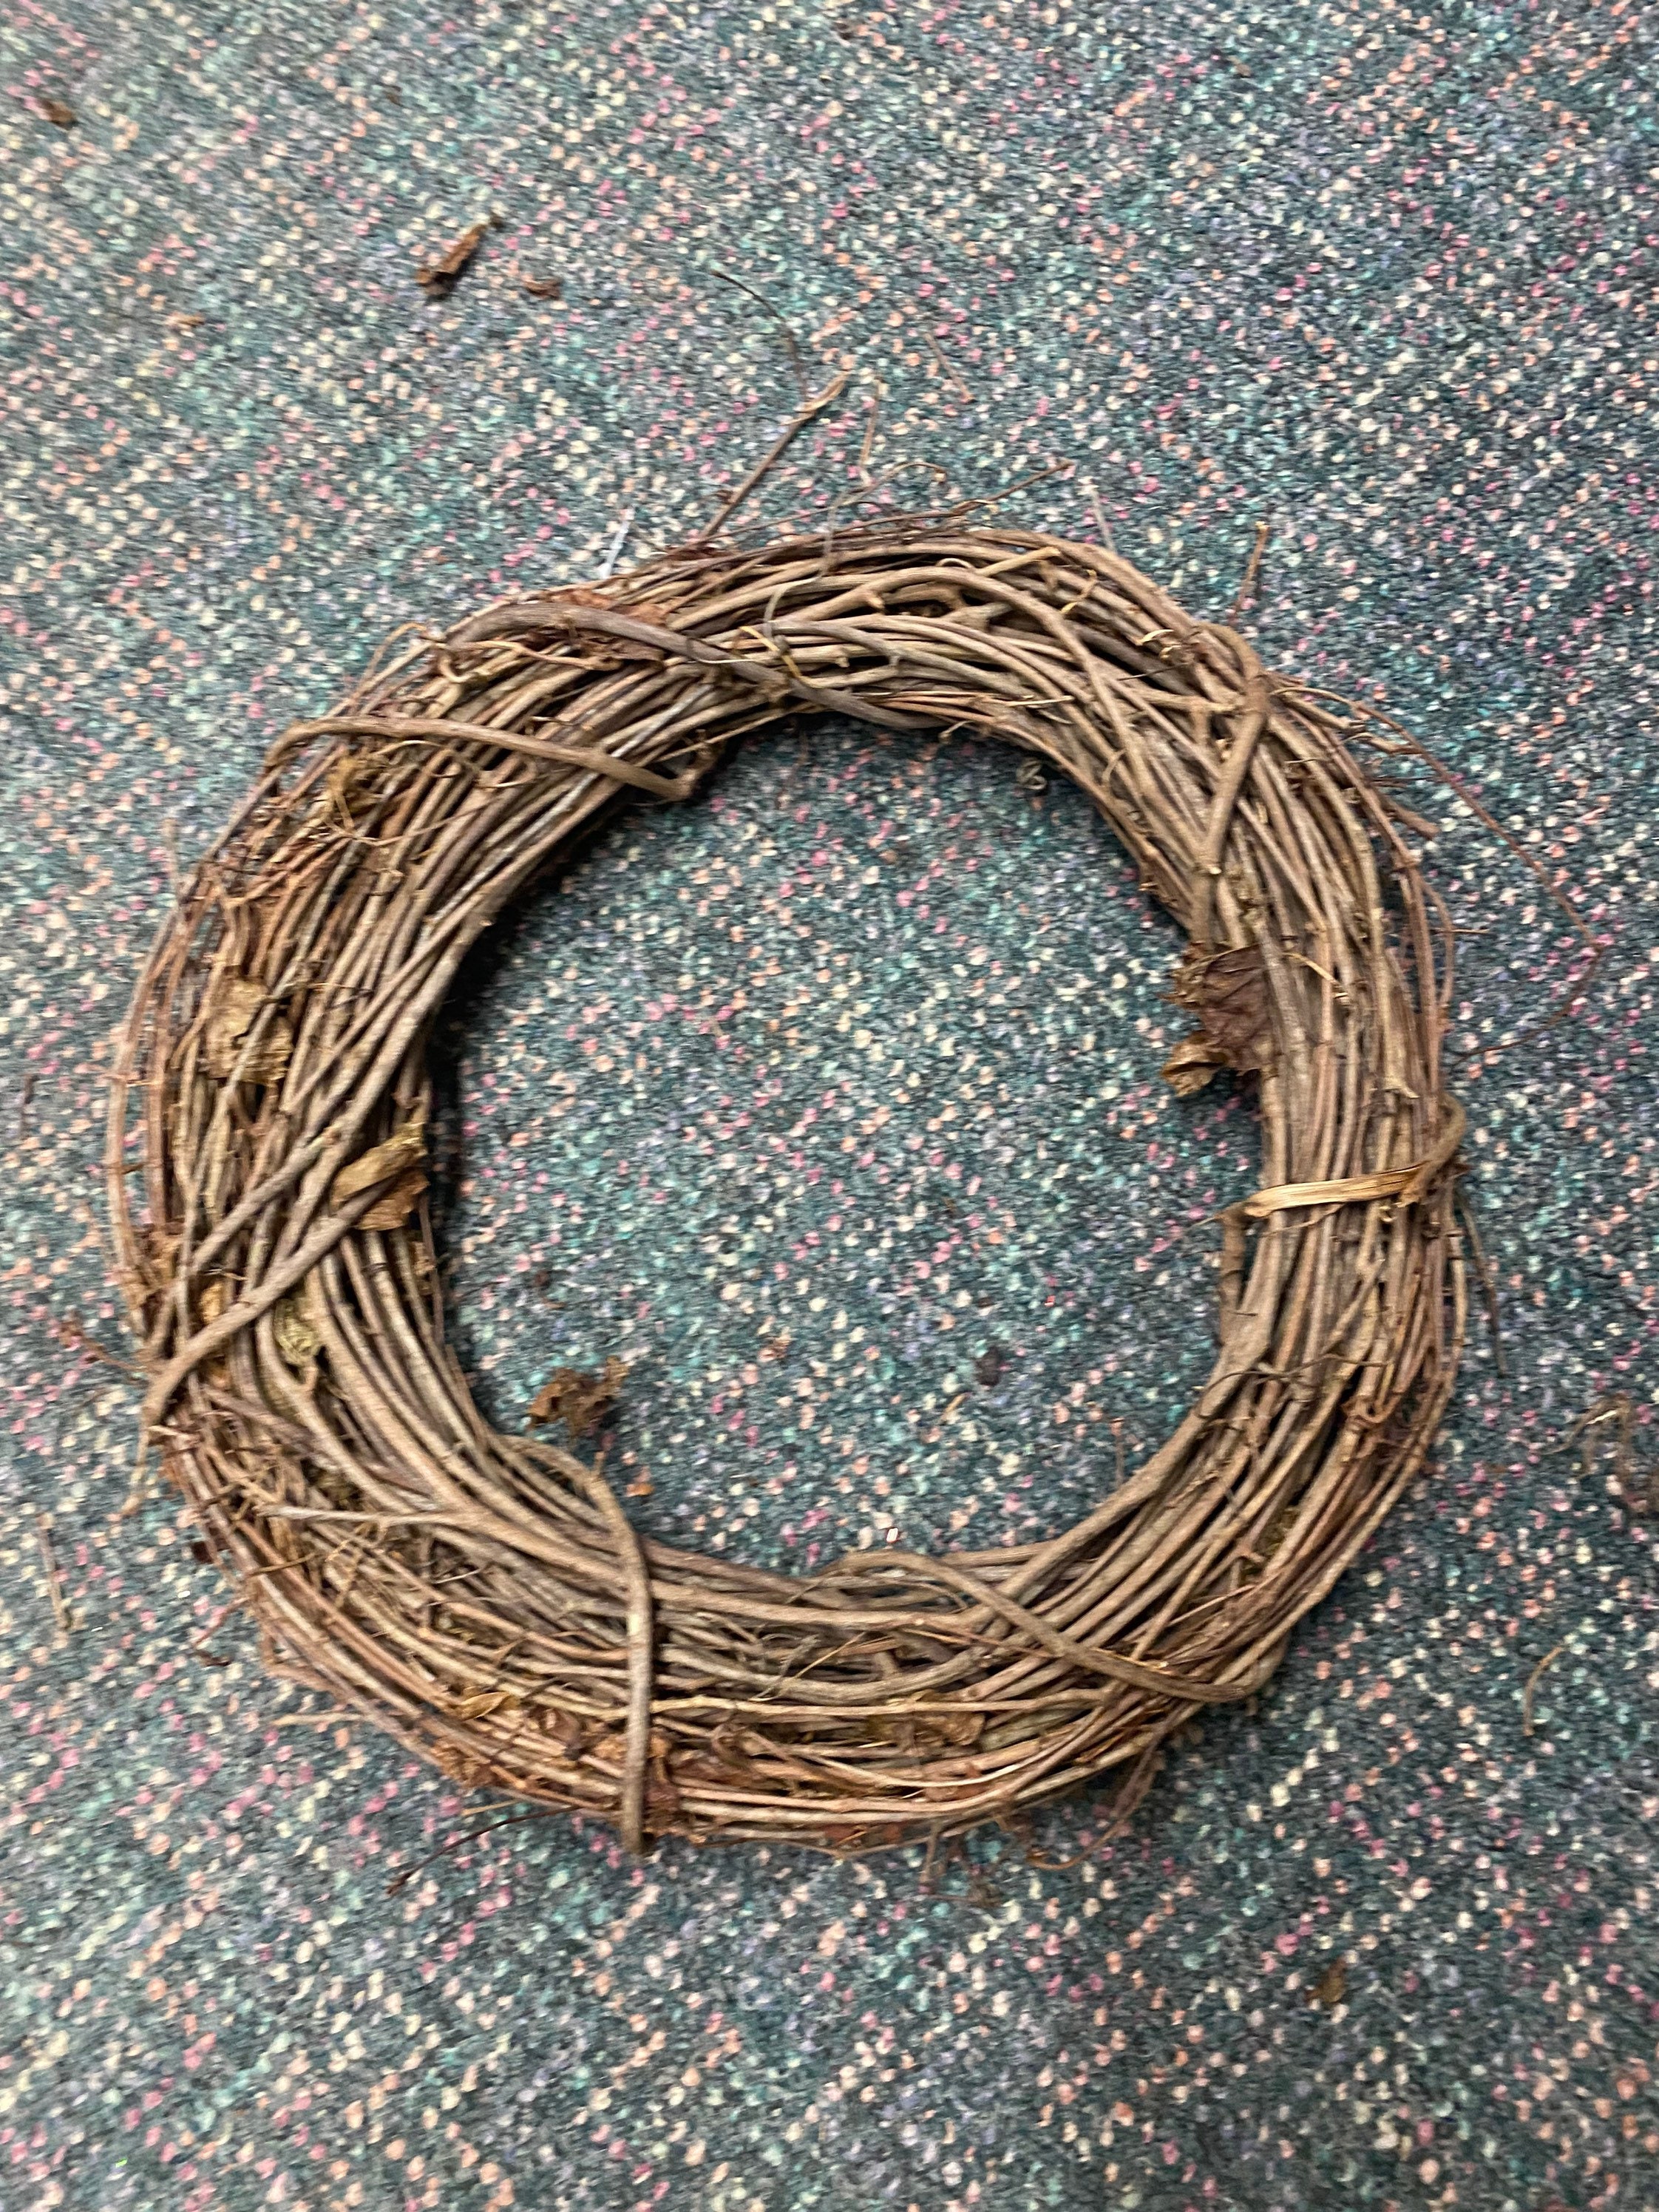 24 Round Grapevine Wreath-wreath Form-wreath Base-wreath Ring